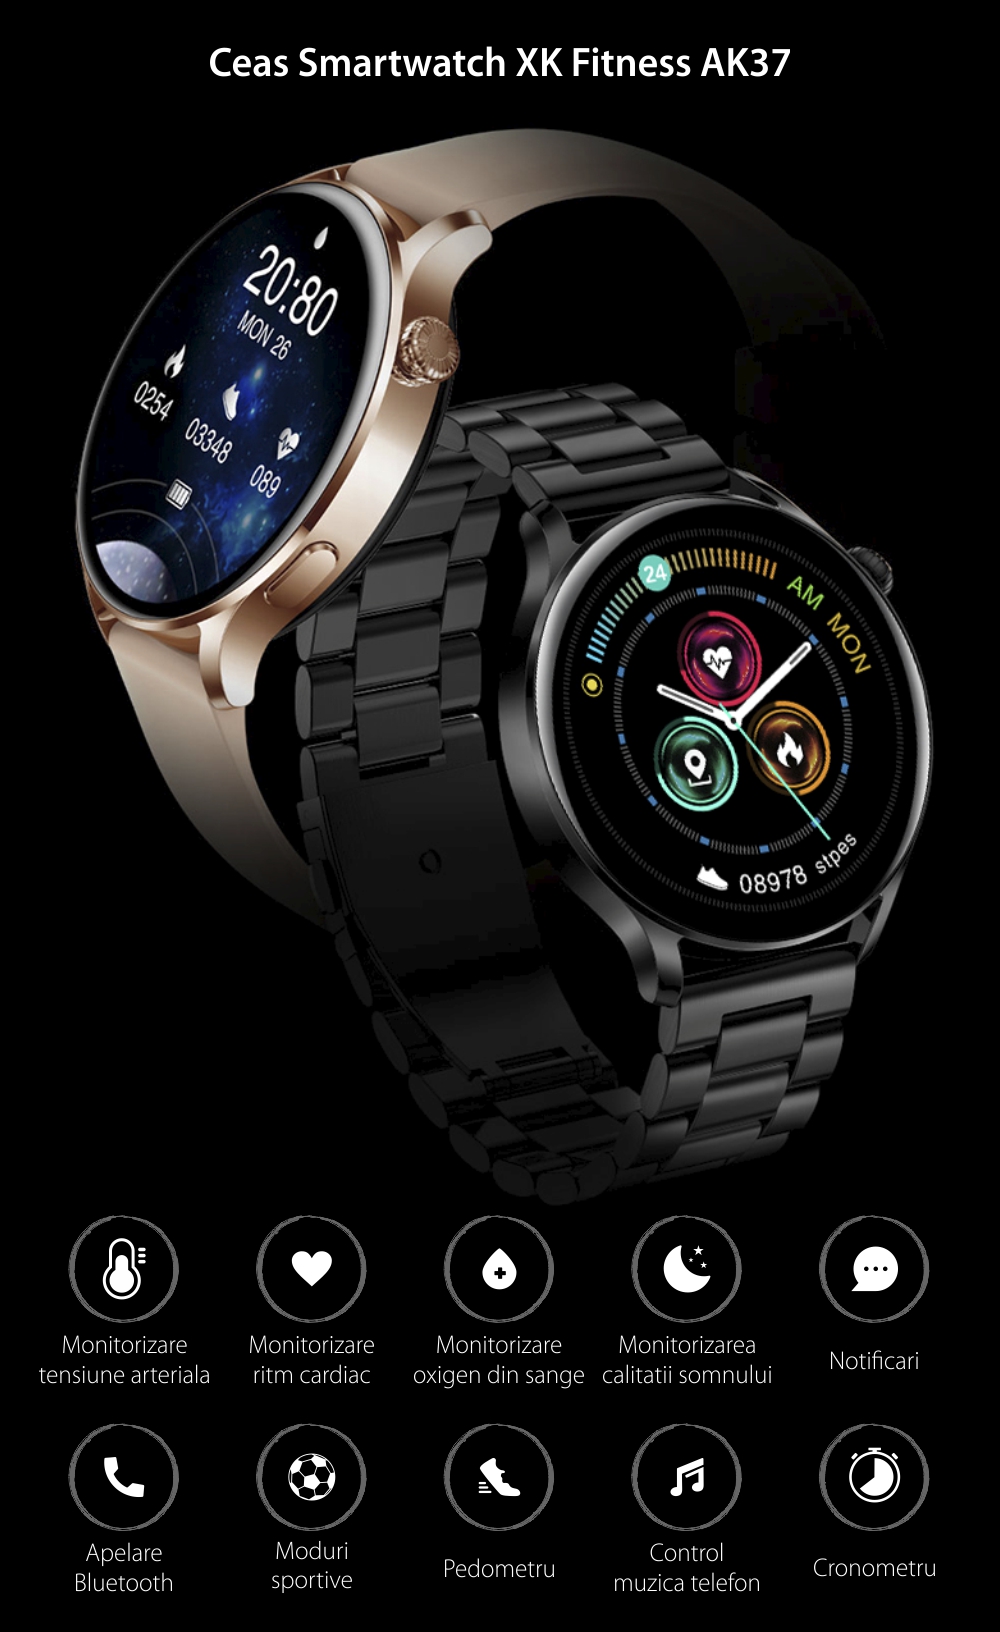 Ceas Smartwatch XK Fitness AK37 cu Functii monitorizare sanatate, Notificari, Bluetooth, Cronometru, Bratara otel, Auriu